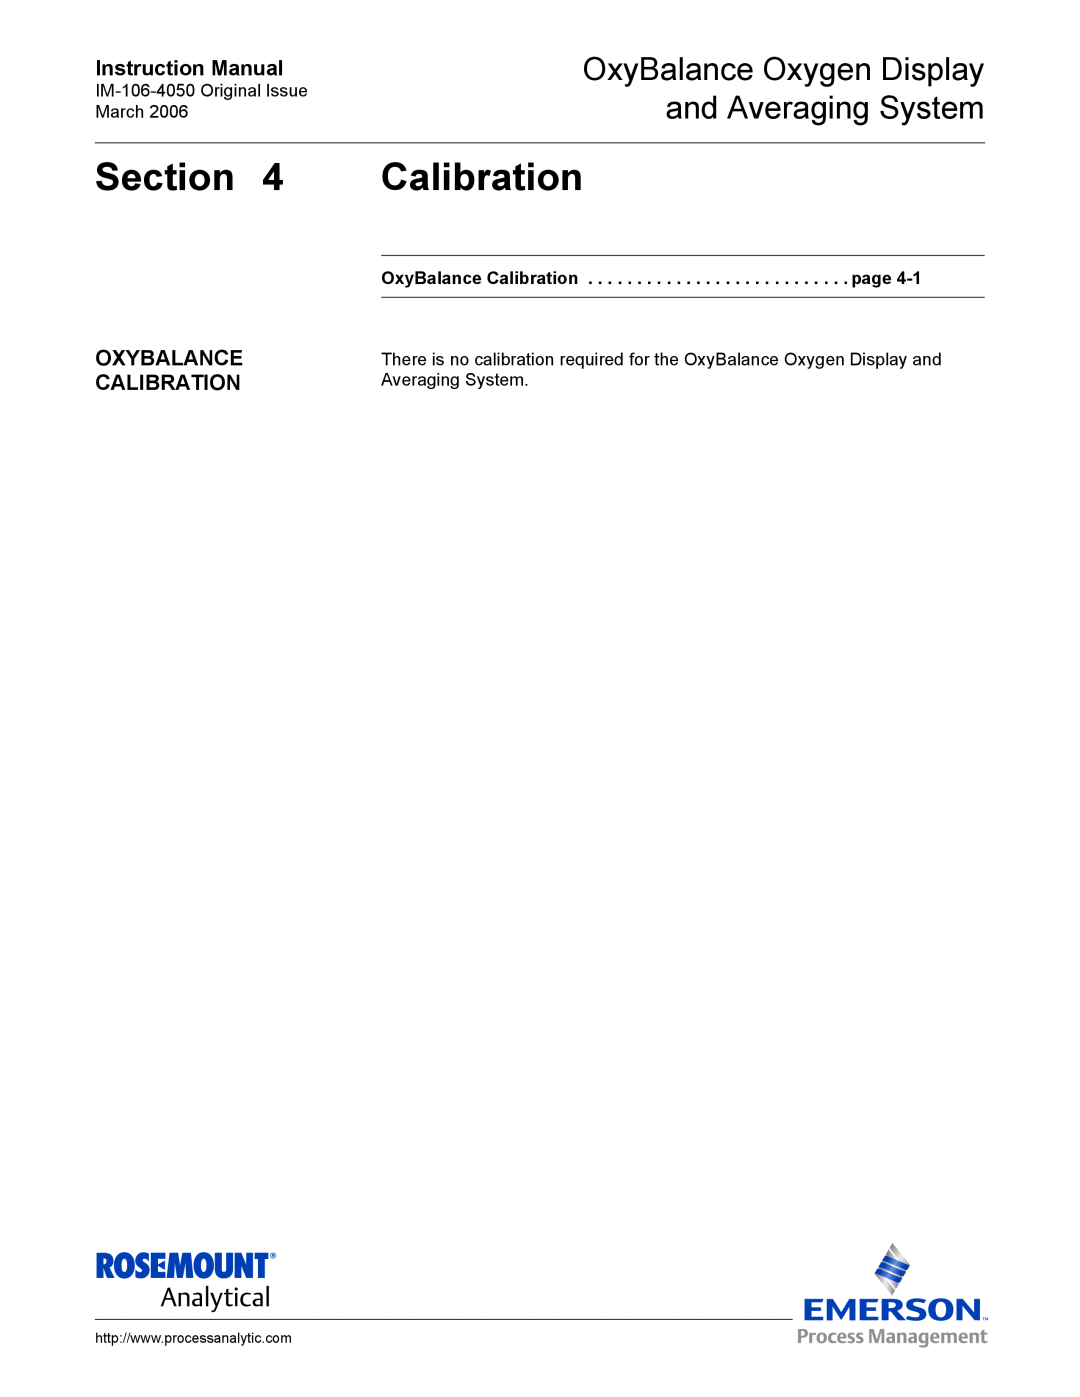 Emerson IM-106-4050 Oxybalance, page, Averaging System, Section, Instruction Manual, OxyBalance Calibration 